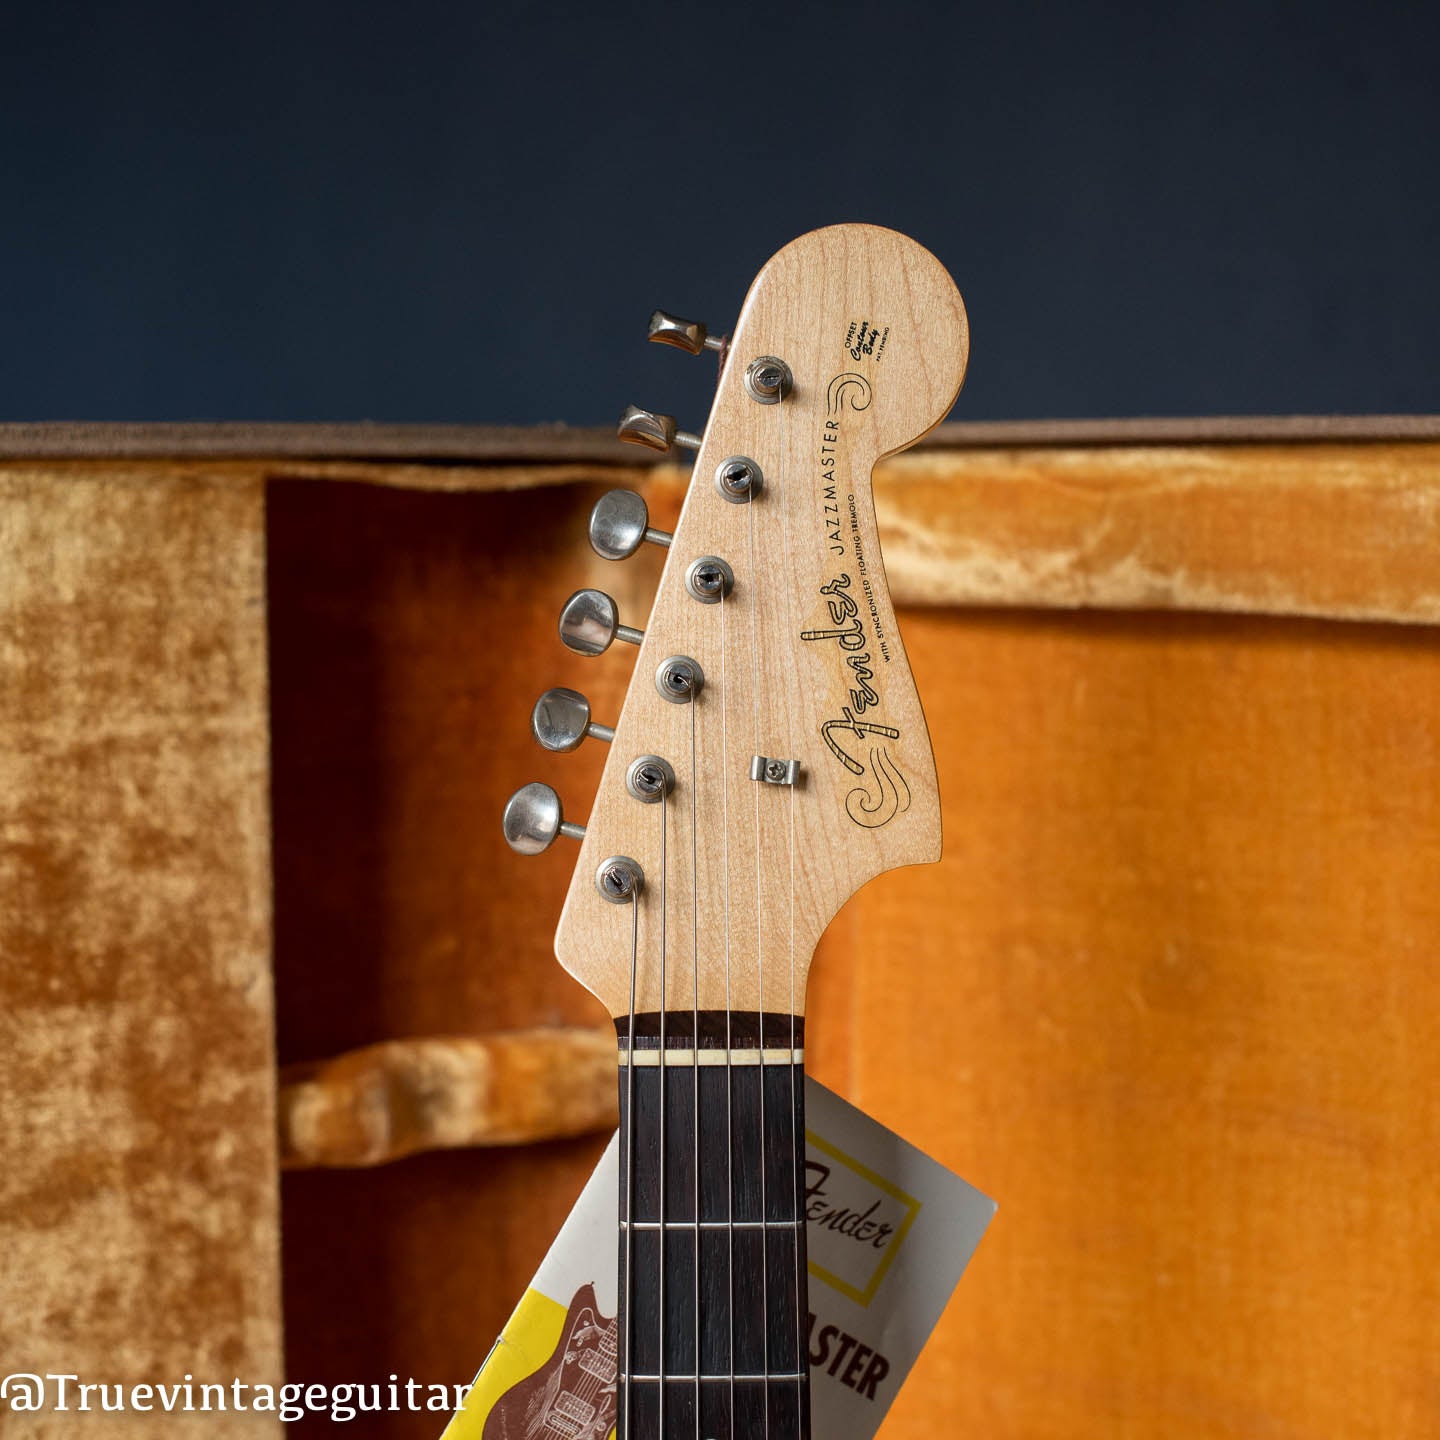 1961 Fender Jazzmaster Blond finish, headstock